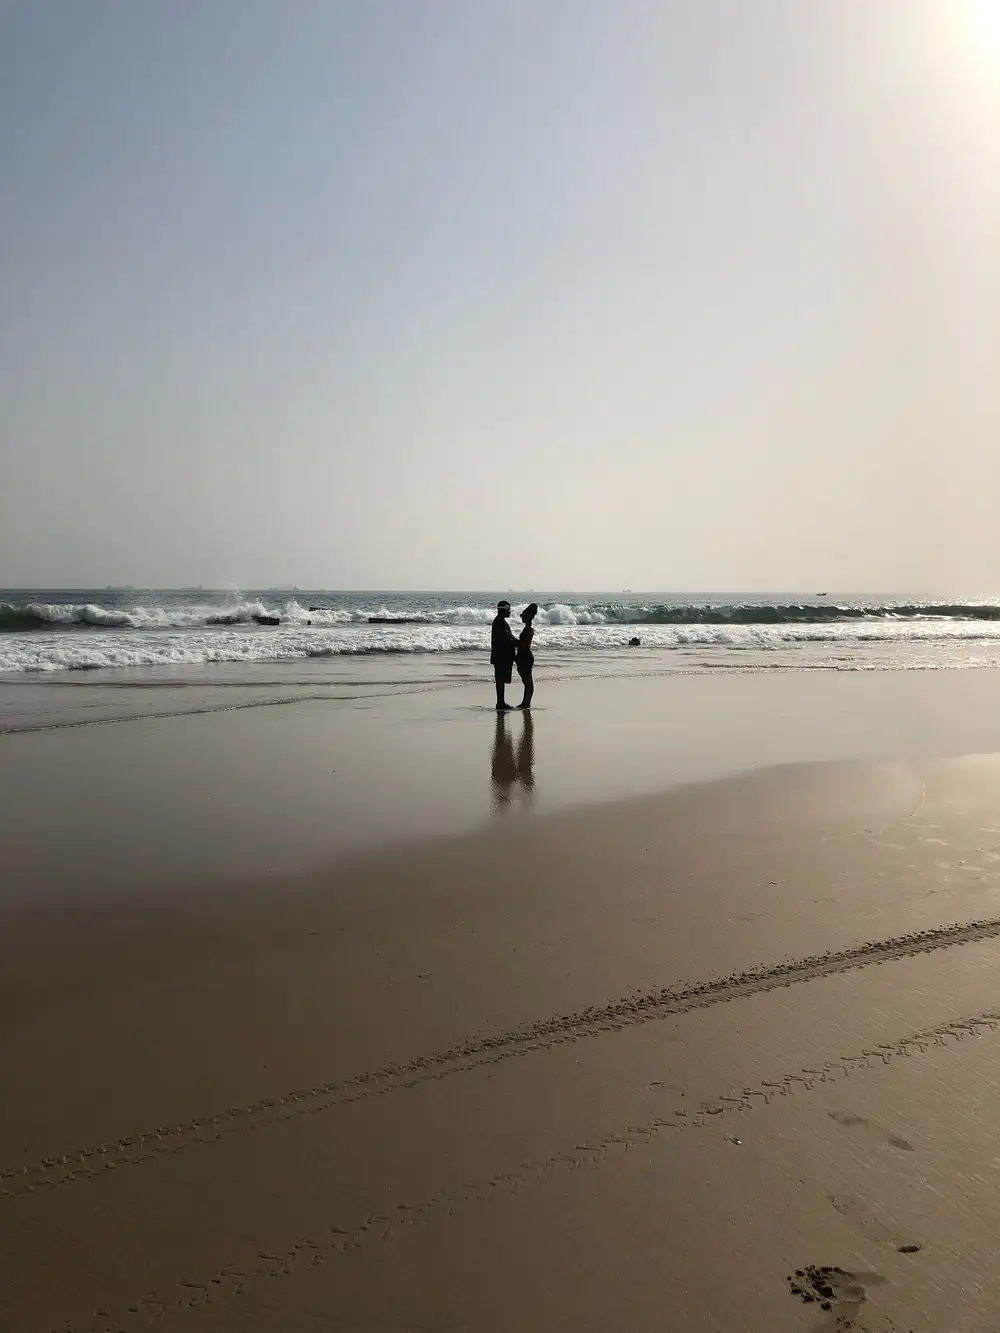 A Man and A Woman on a beach